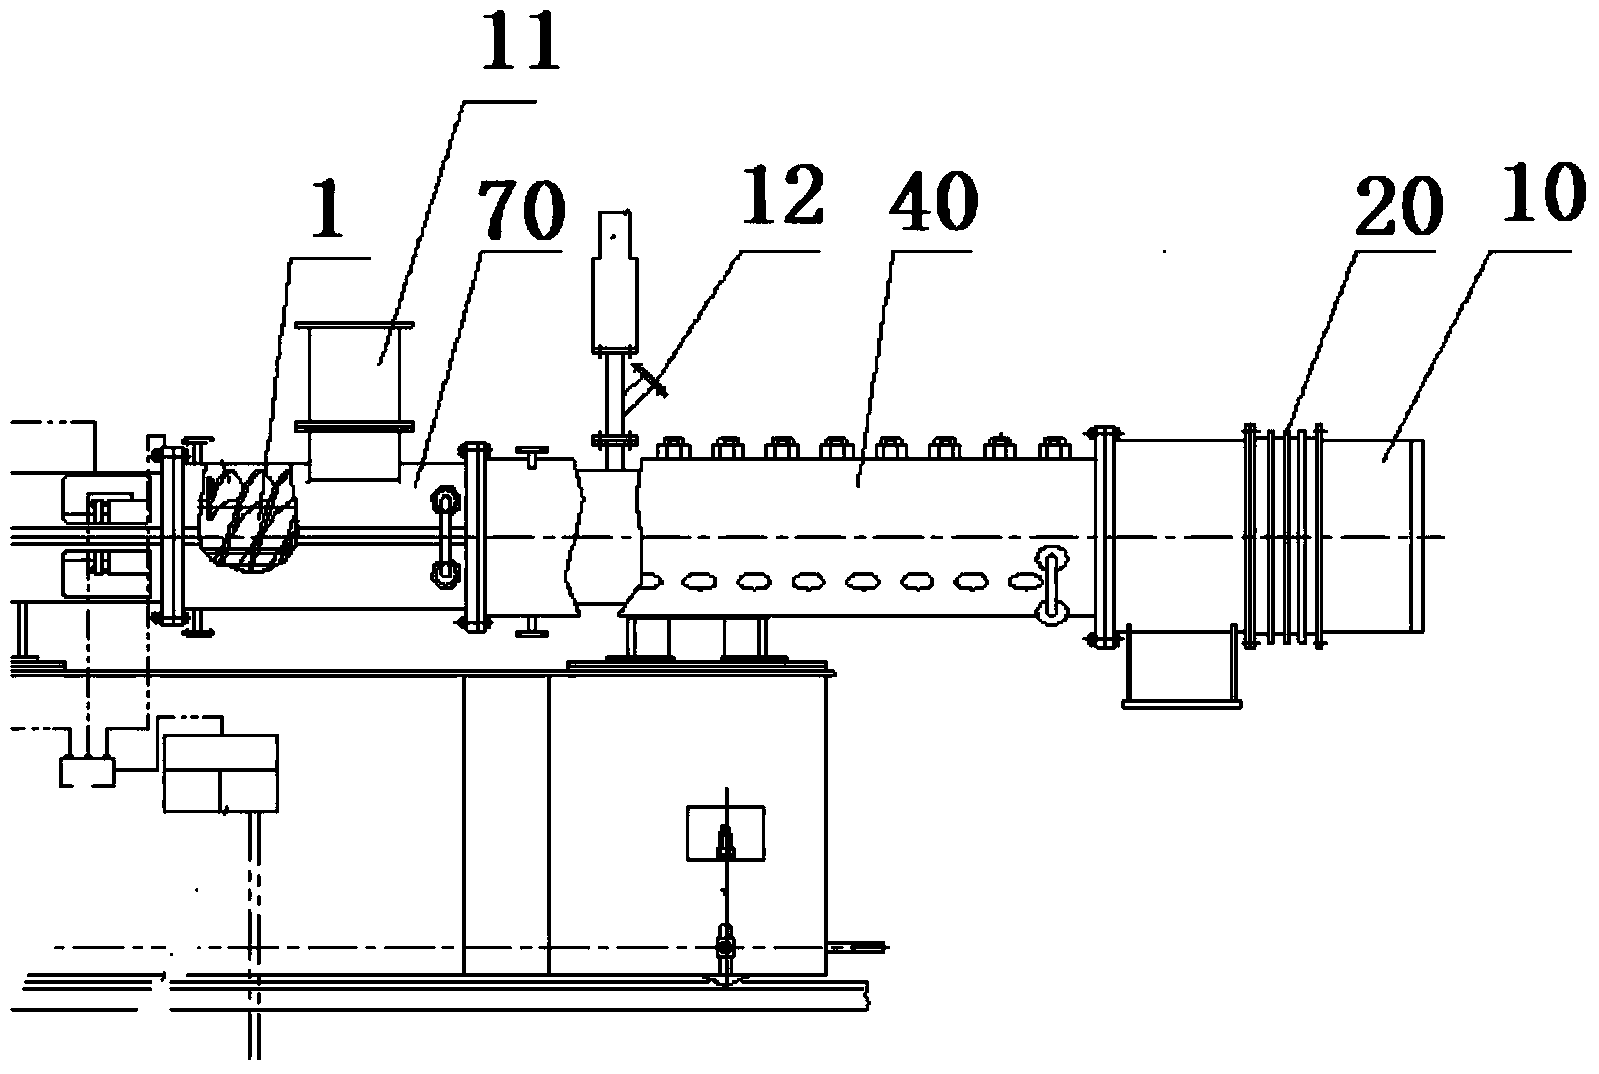 Pre-reactor main shaft spiral system for hydrogen fluoride